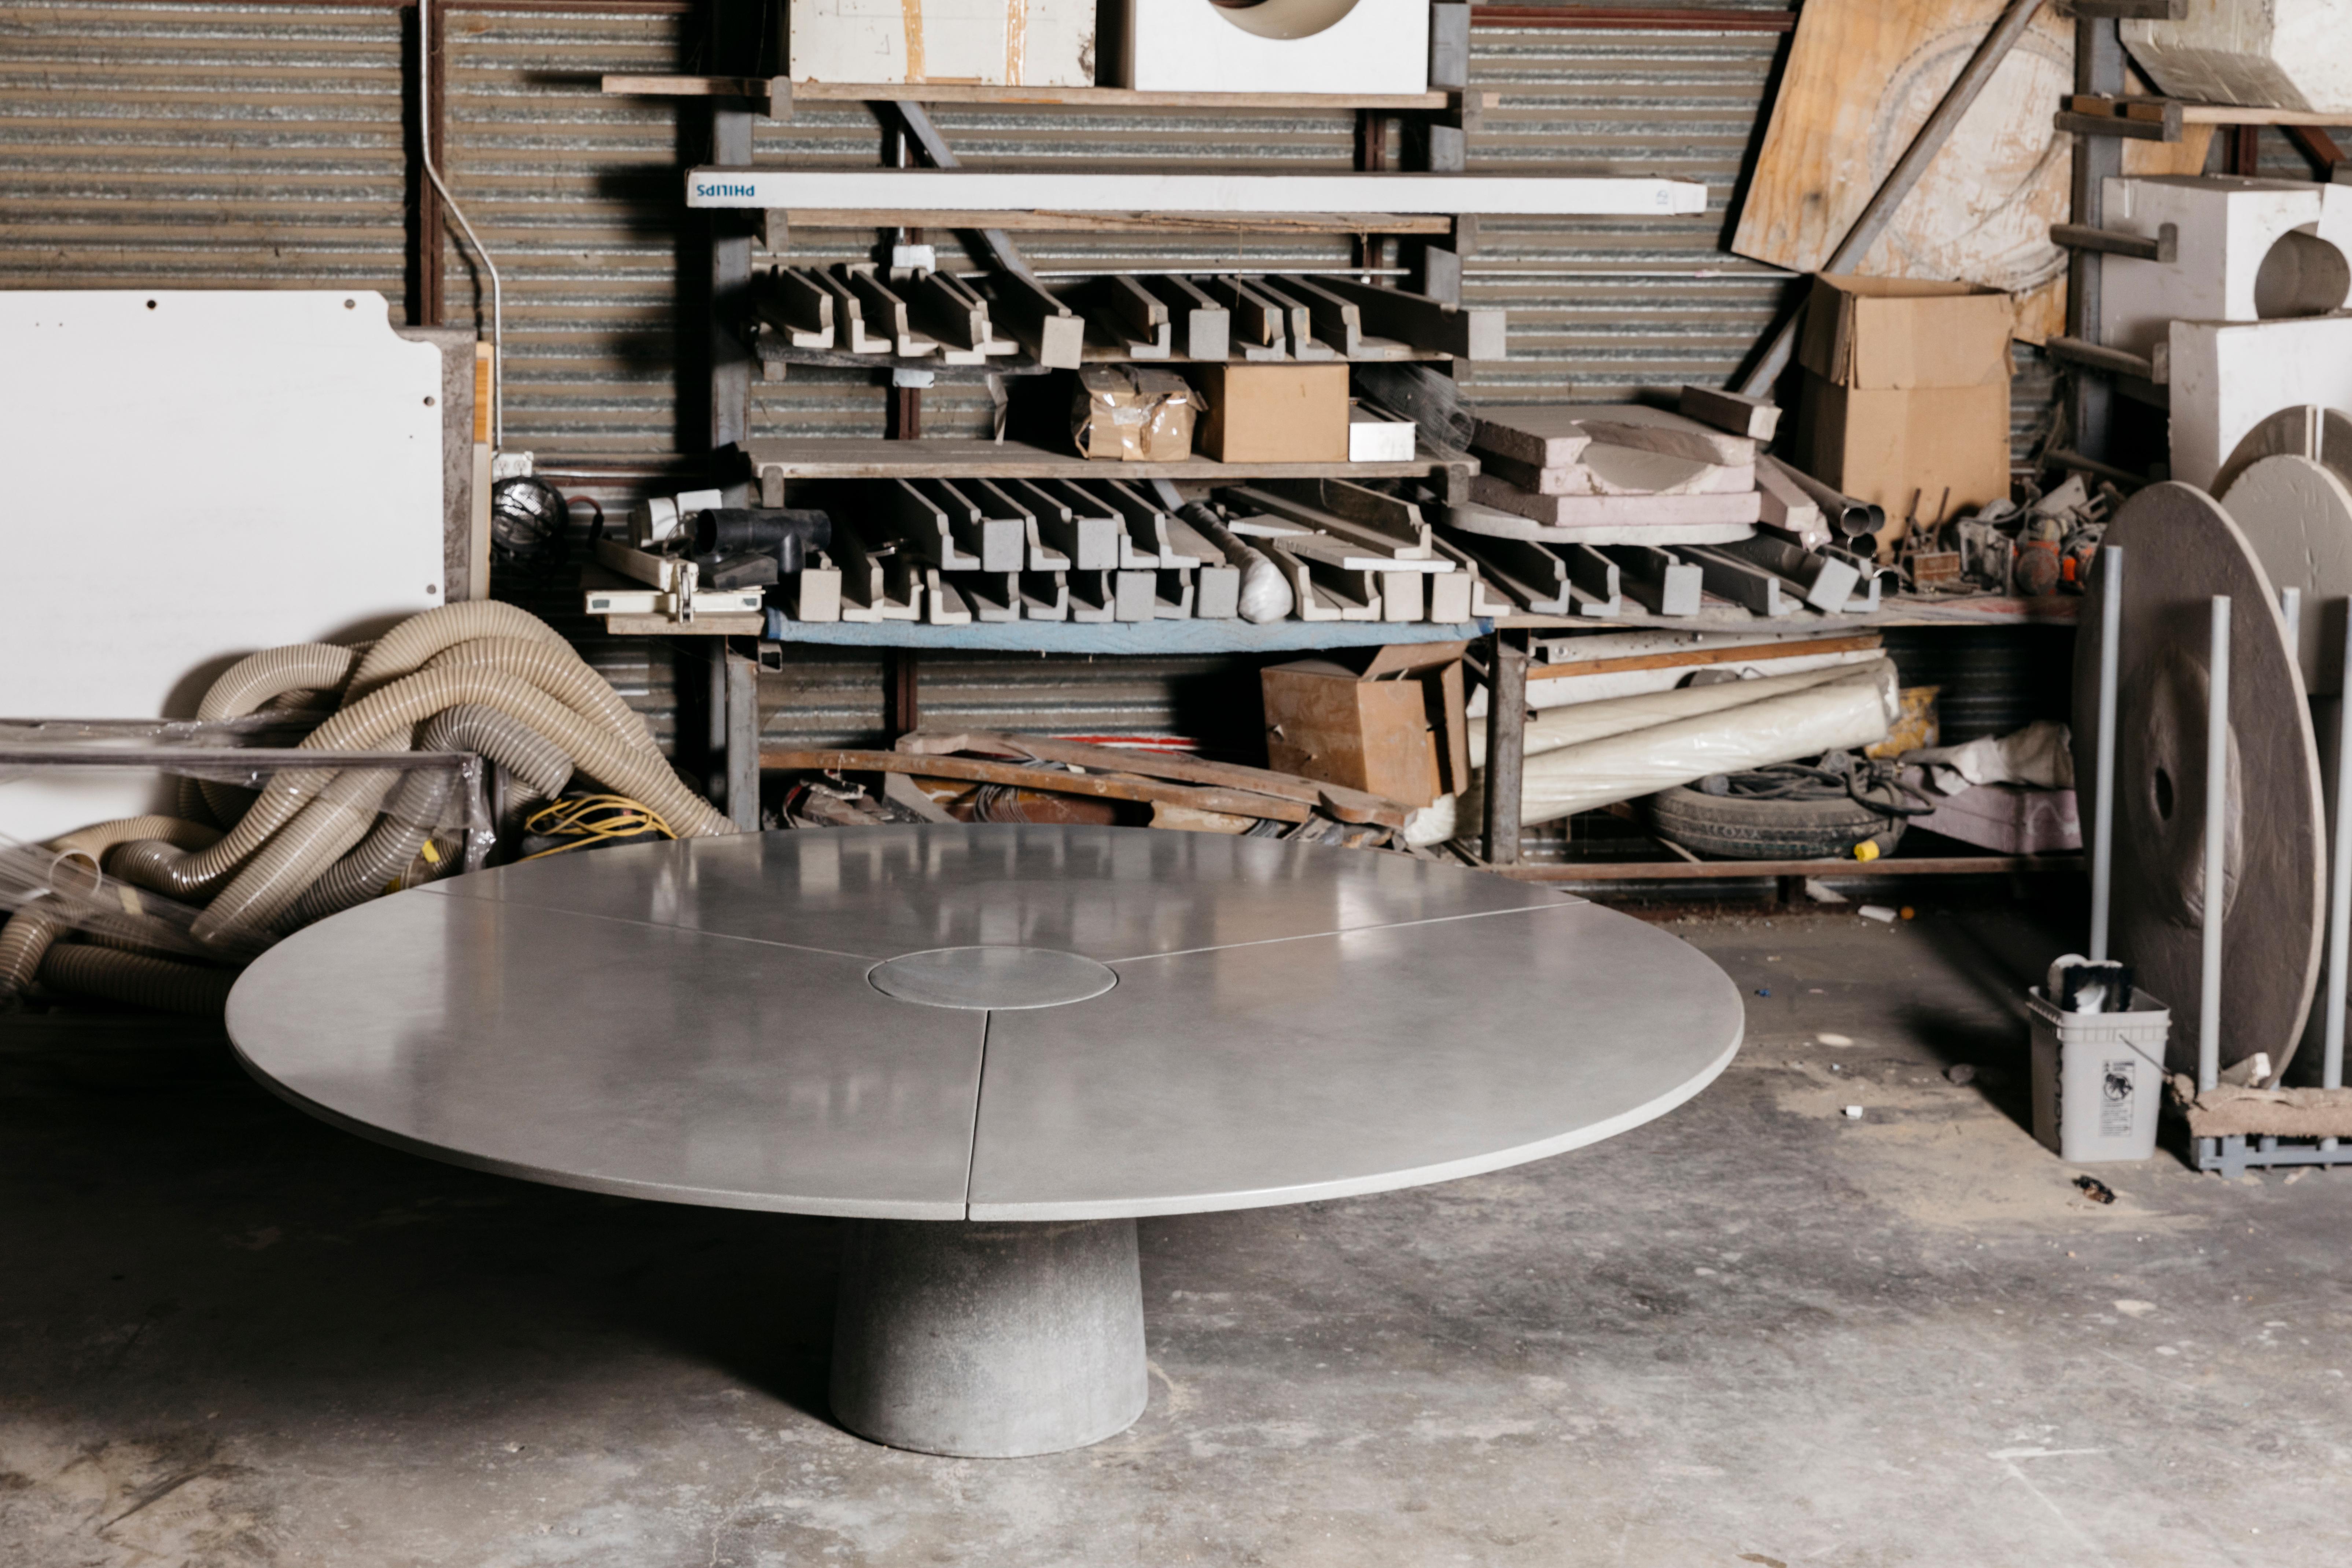 North American James de Wulf Concrete 3-Piece Locking Round Table, 102